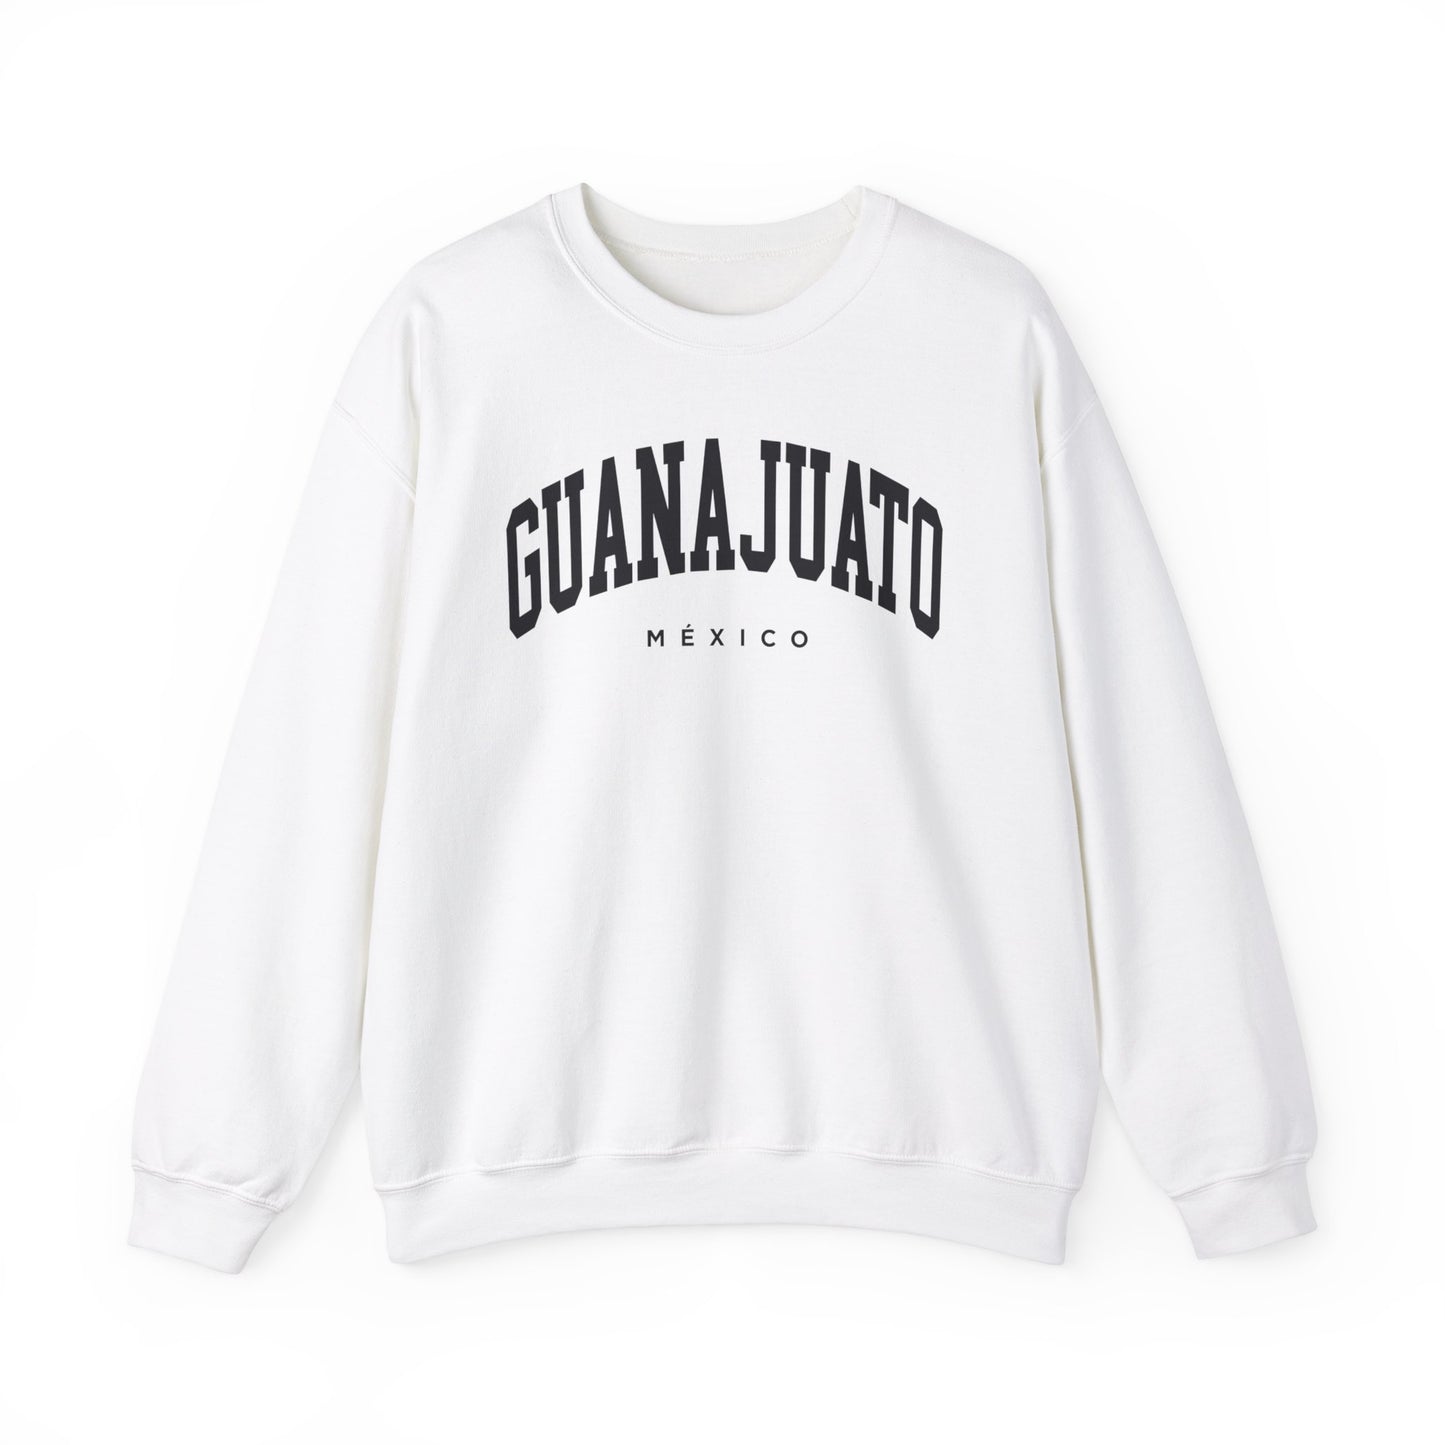 Guanajuato Mexico Sweatshirt